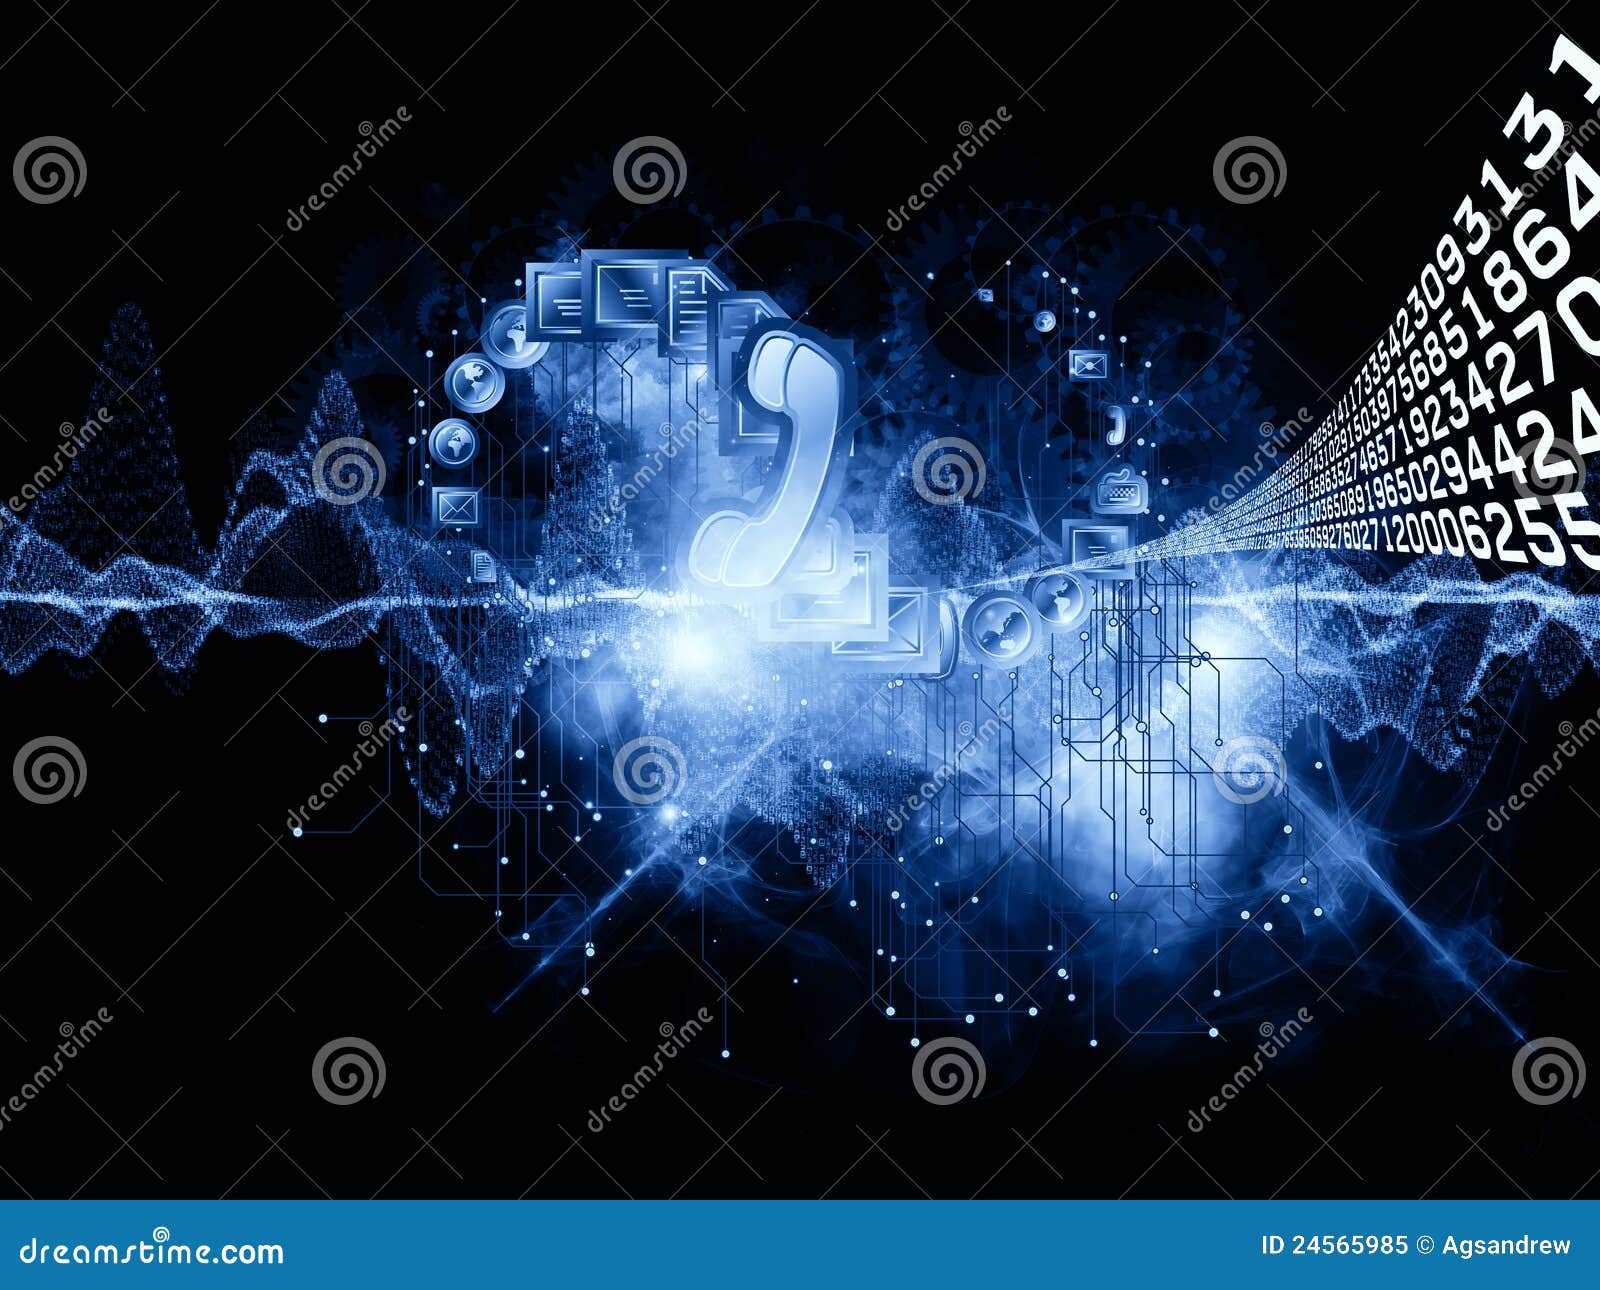 Information universe stock illustration. Illustration of backdrop - 24565985